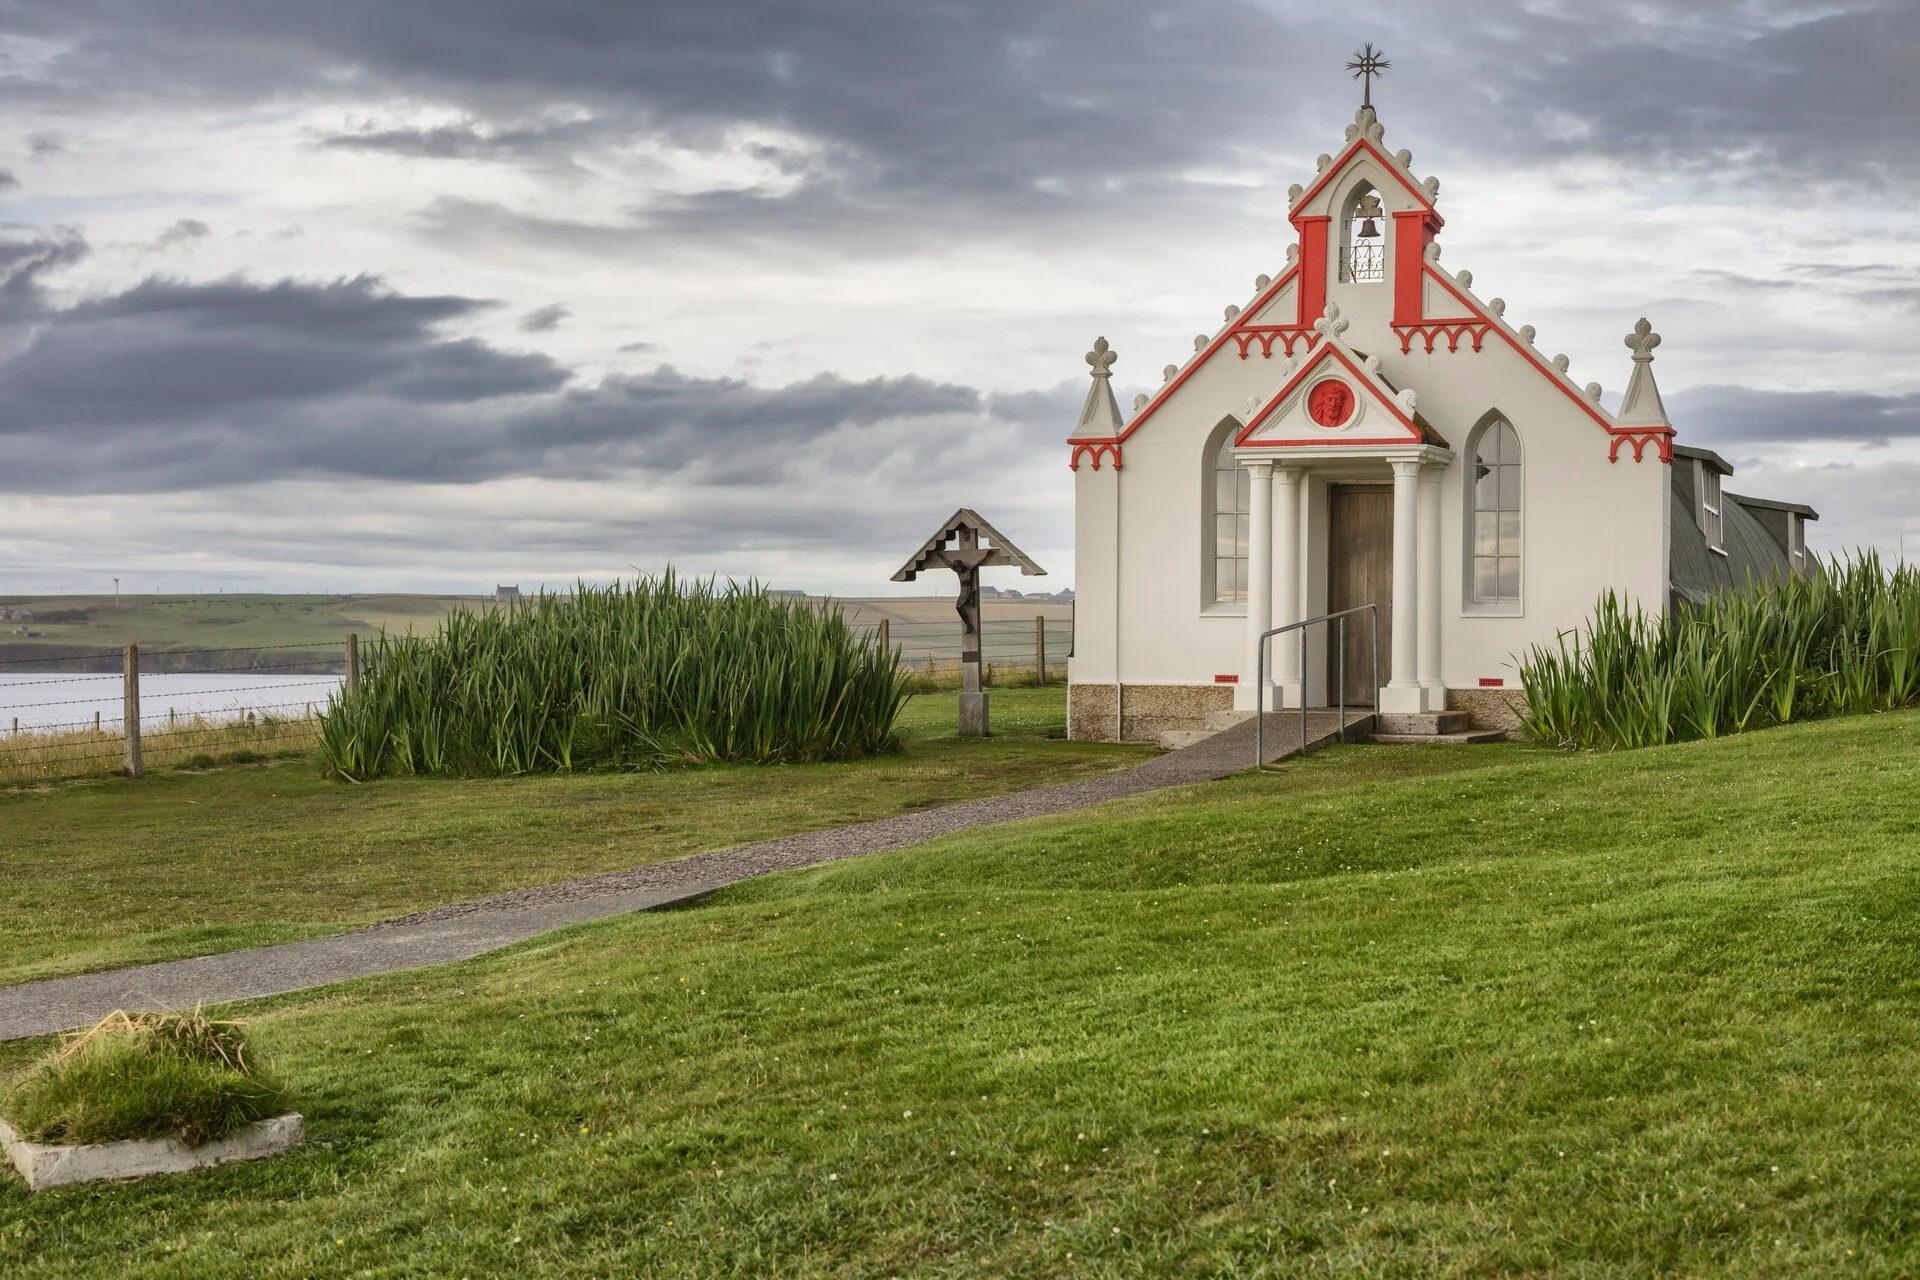 Lamb Holm - Queen of Peace Chapel. Credit: Shutterstock